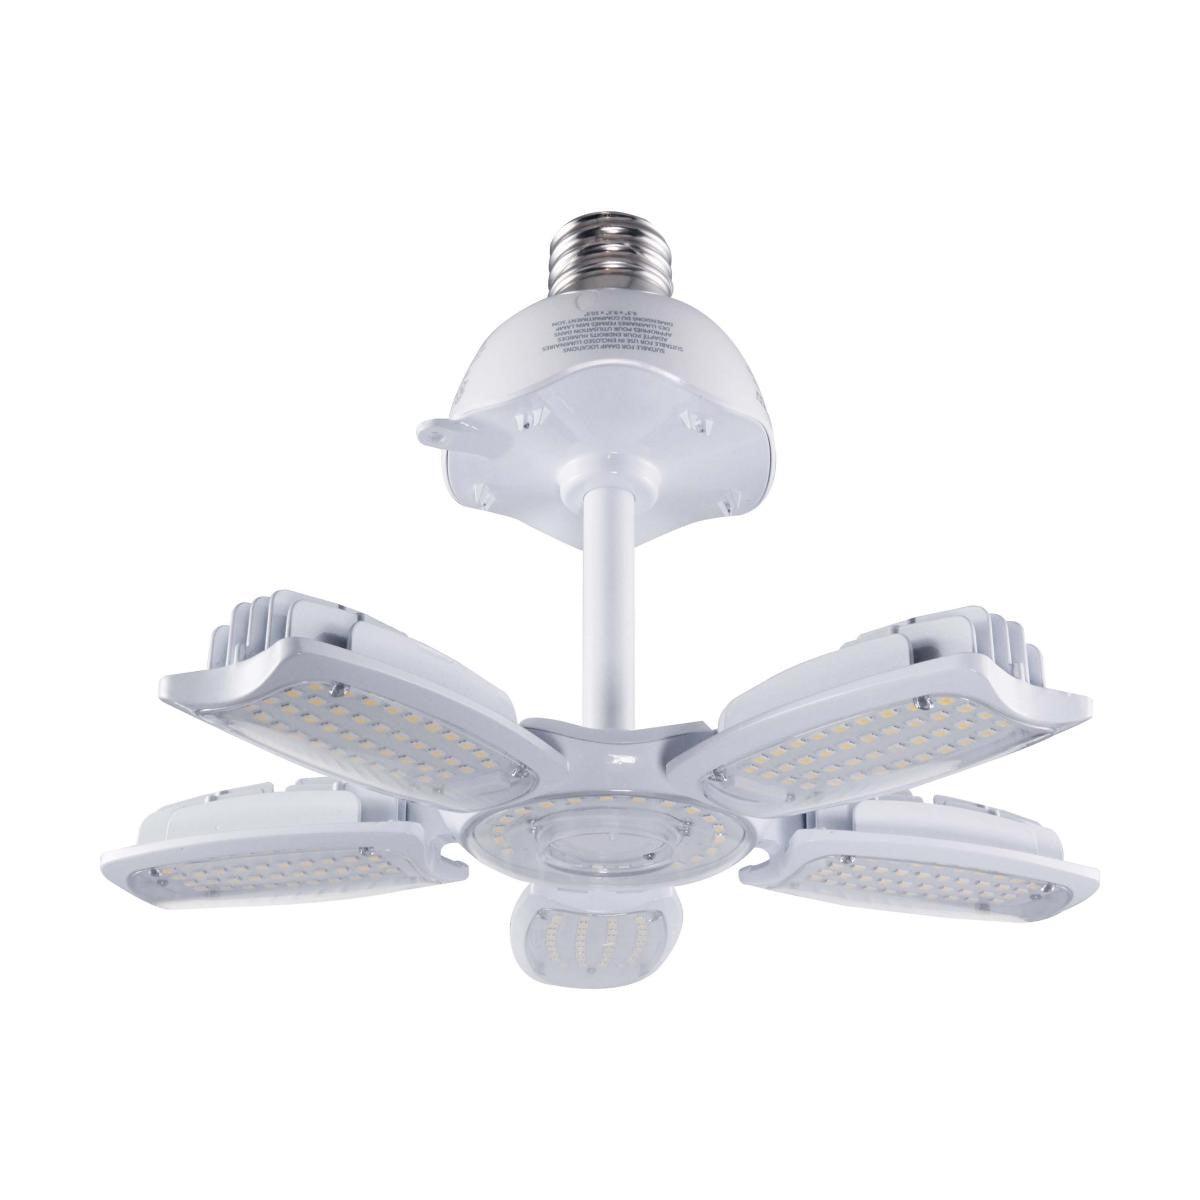 LED Deformable Retrofit Lamp, 60W, 8400 Lumens, 5000K, EX39 Mogul Extended Mogul Base, 120-277V - Bees Lighting